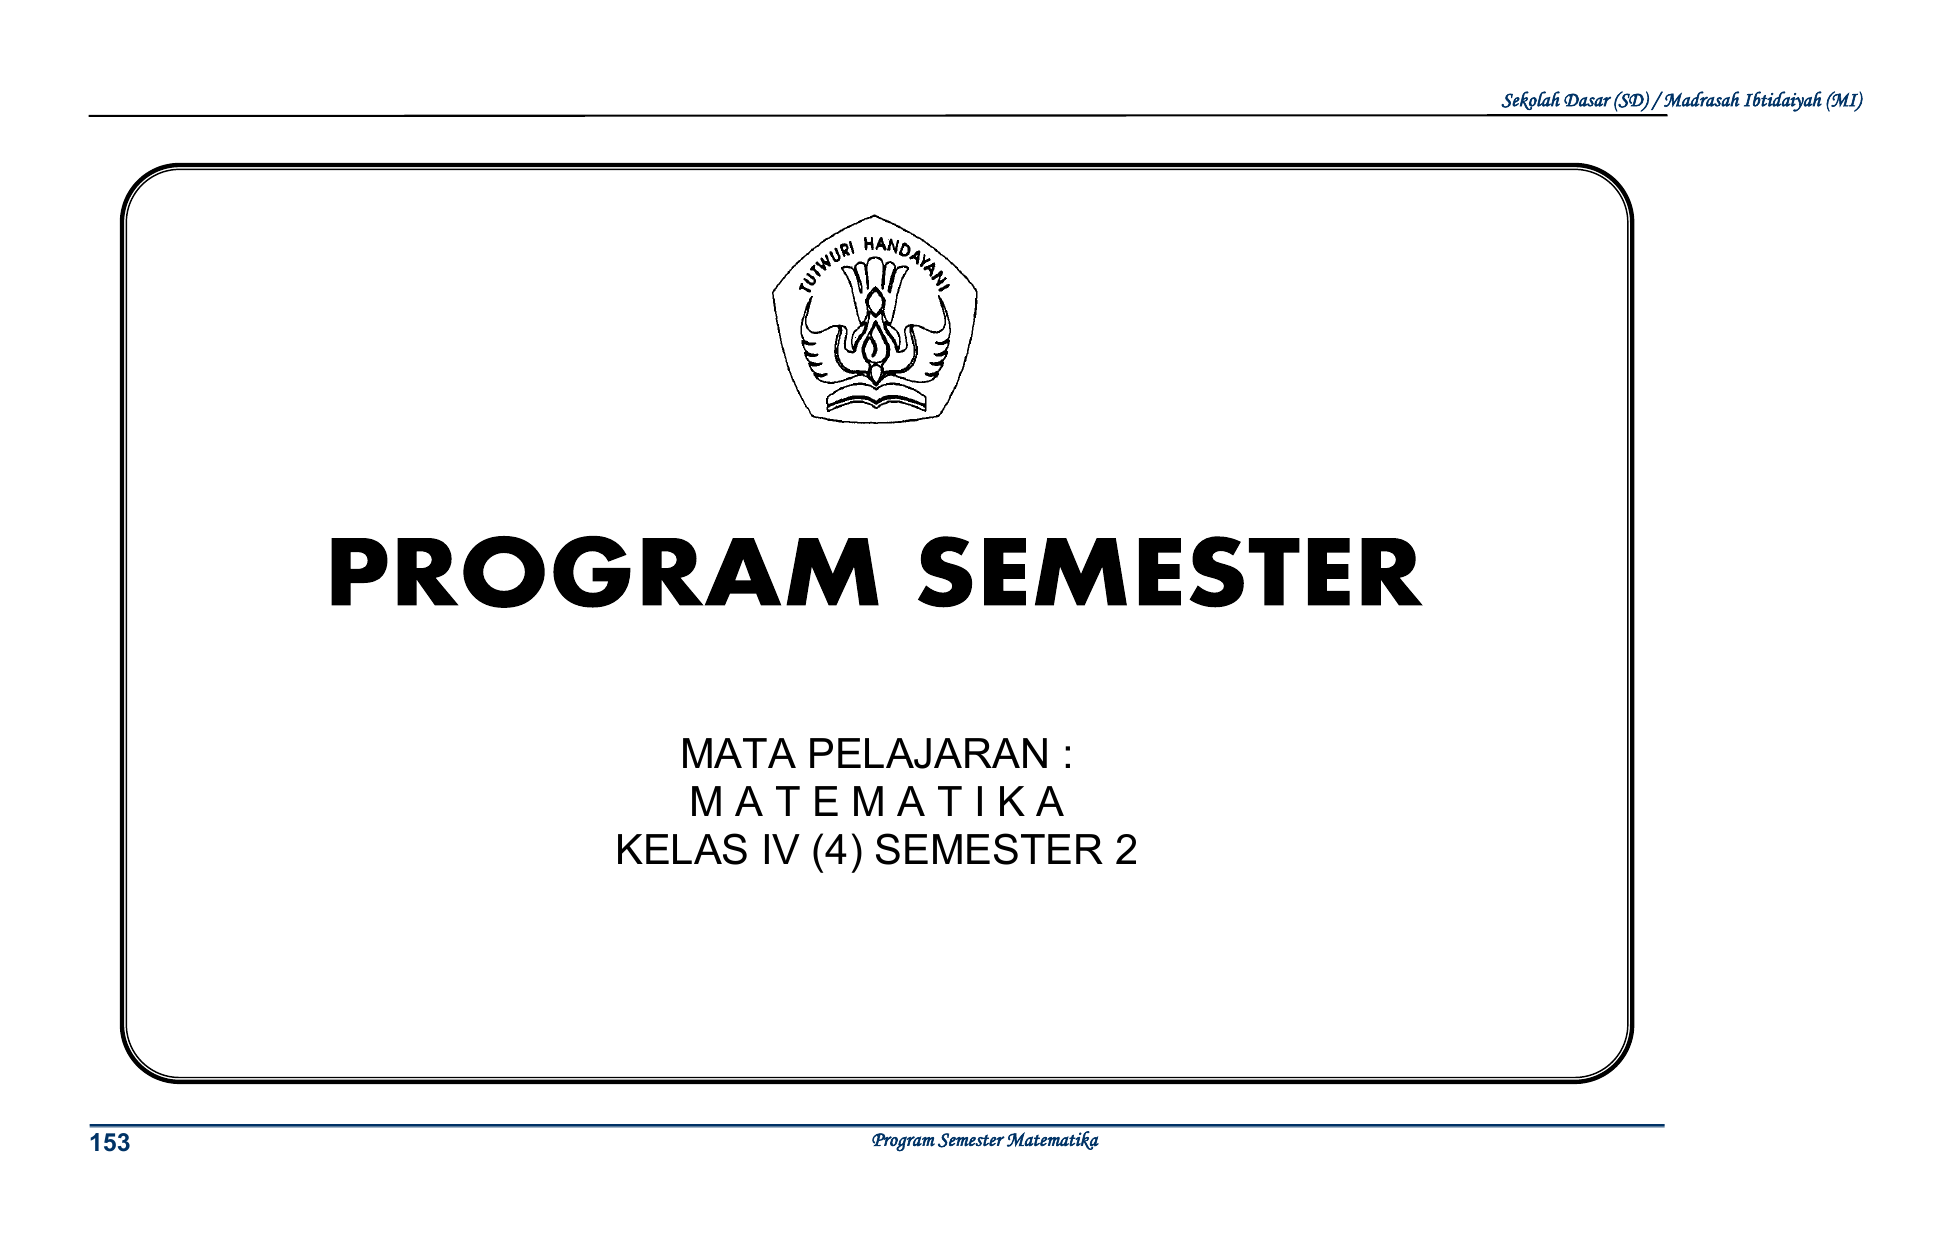 Soal Uts Pts Matematika Kelas 4 Semester 1 K13 Tahun 2018 2019 Promesmmkls4smt2